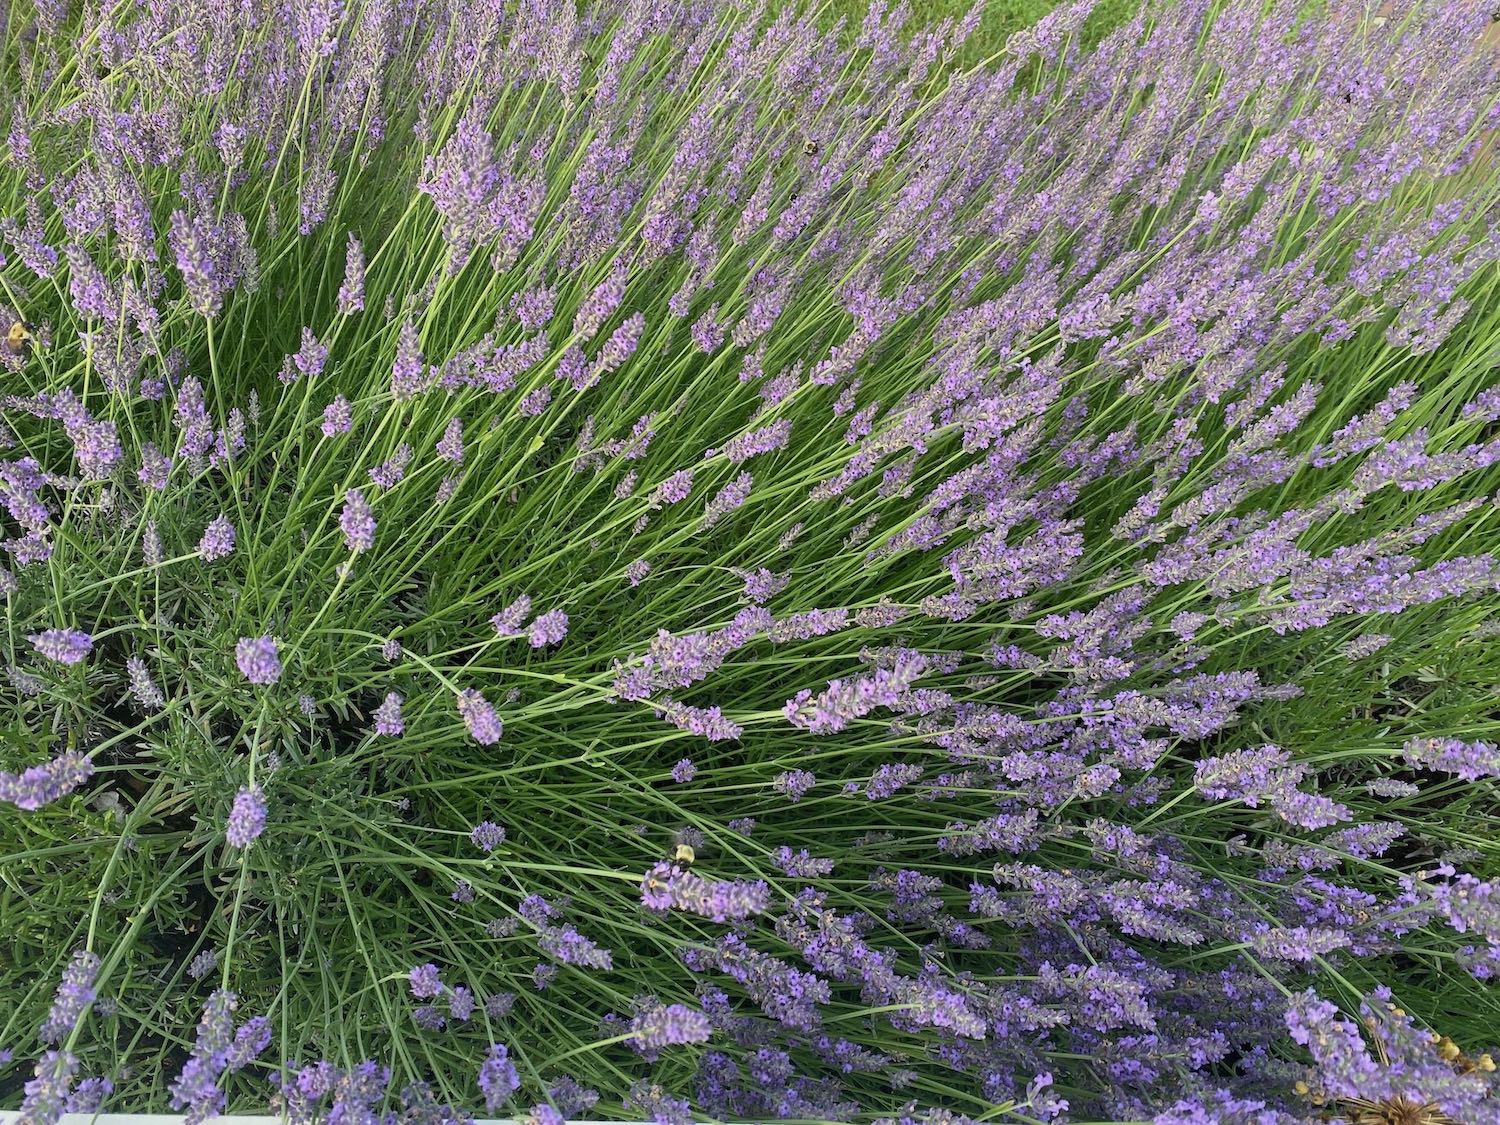 It's the weekend! Number 304, Lavender in Bloom